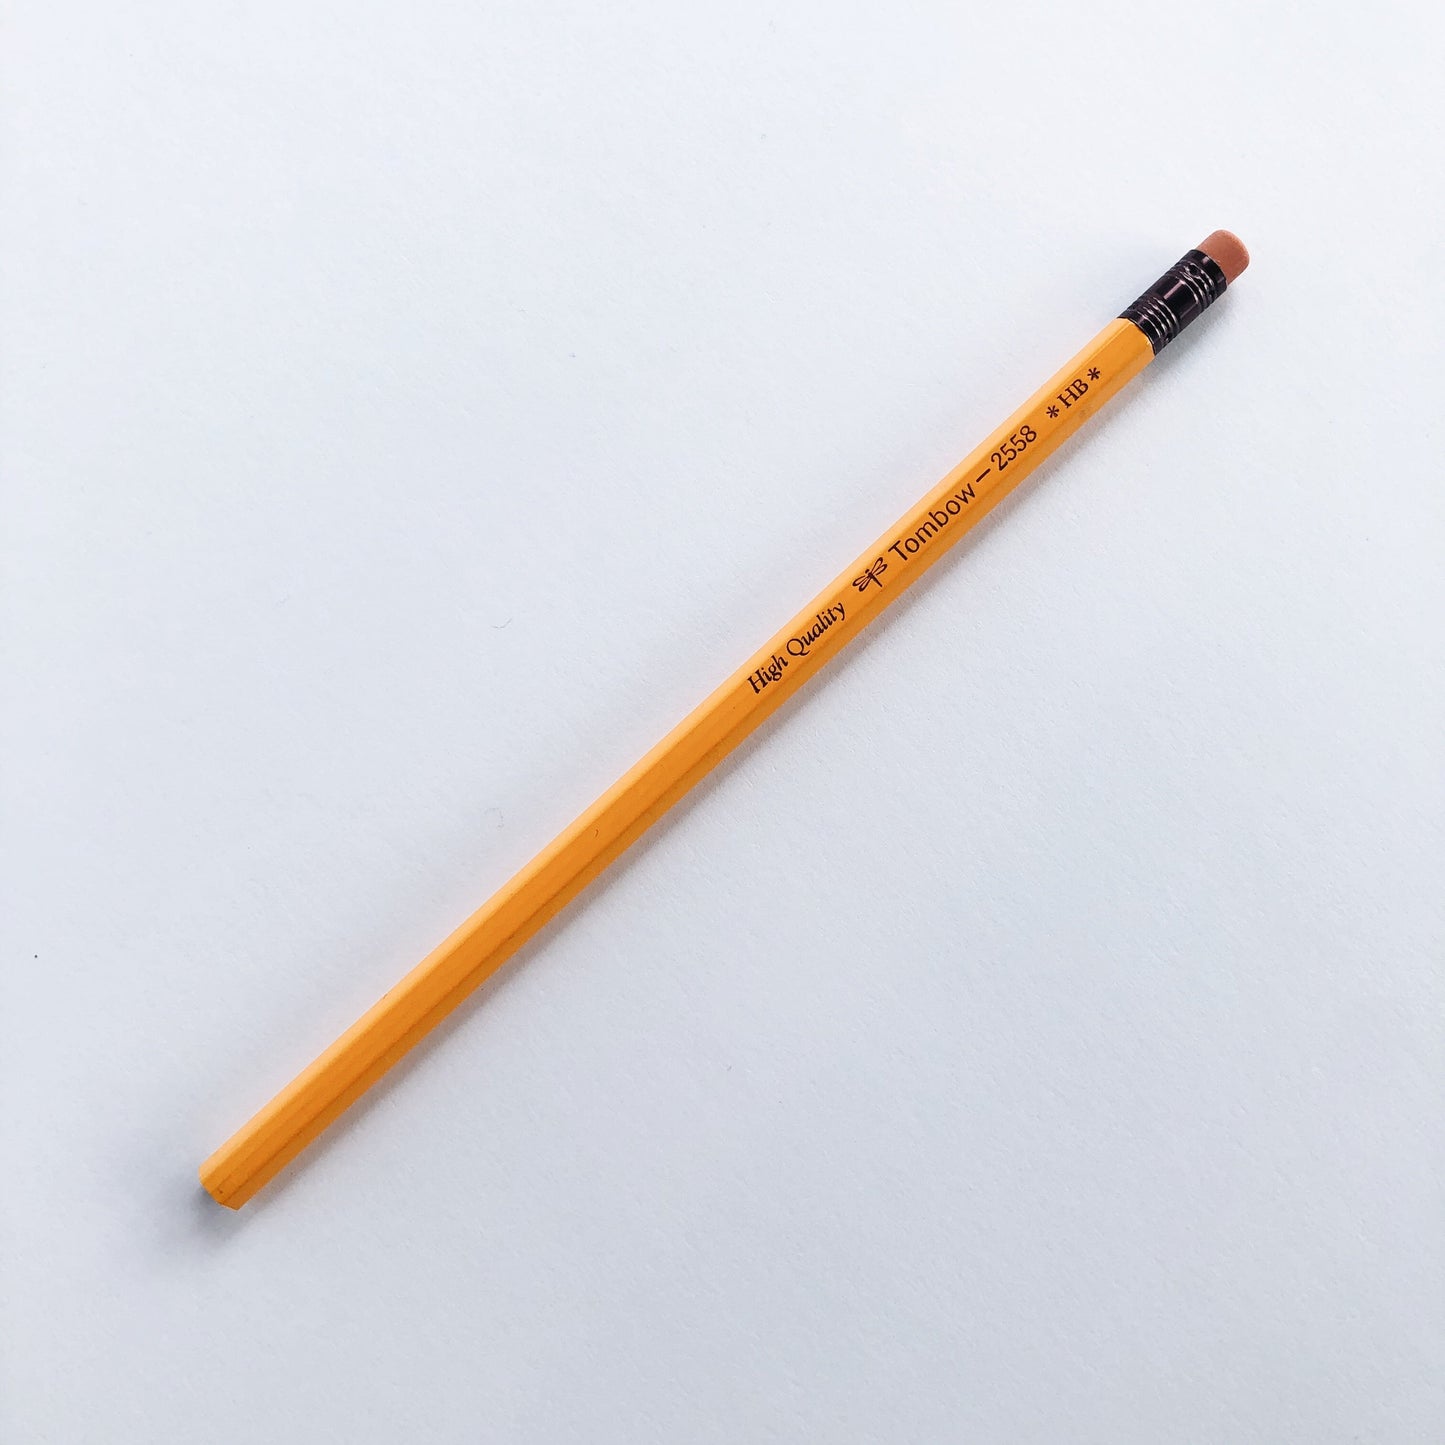 Tombow 2558 Pencil w/ Eraser - HB / Single